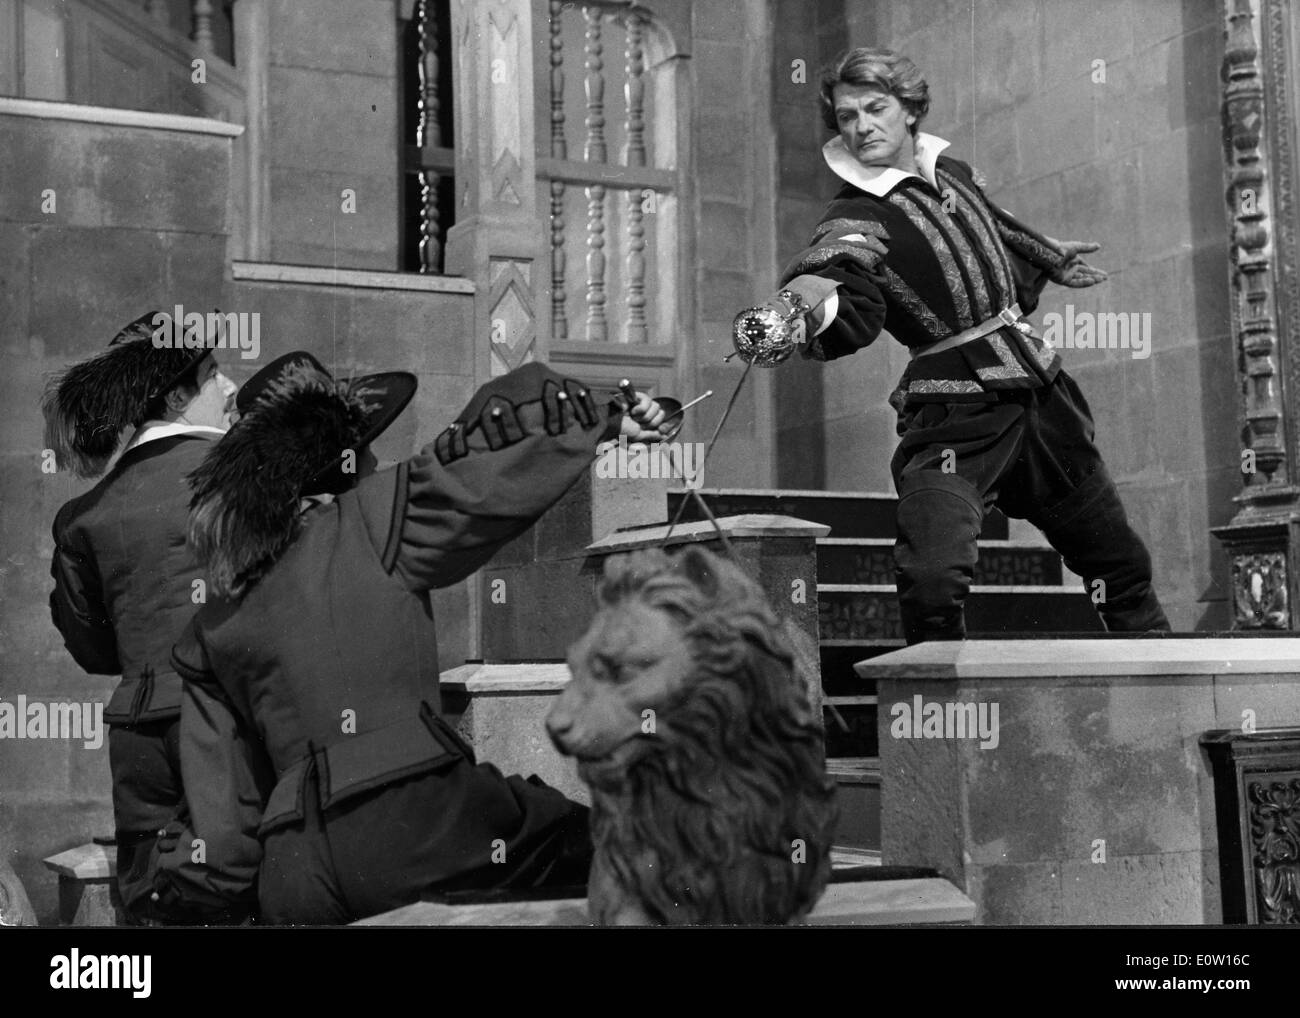 Jean Marais in a sword fighting scene Stock Photo